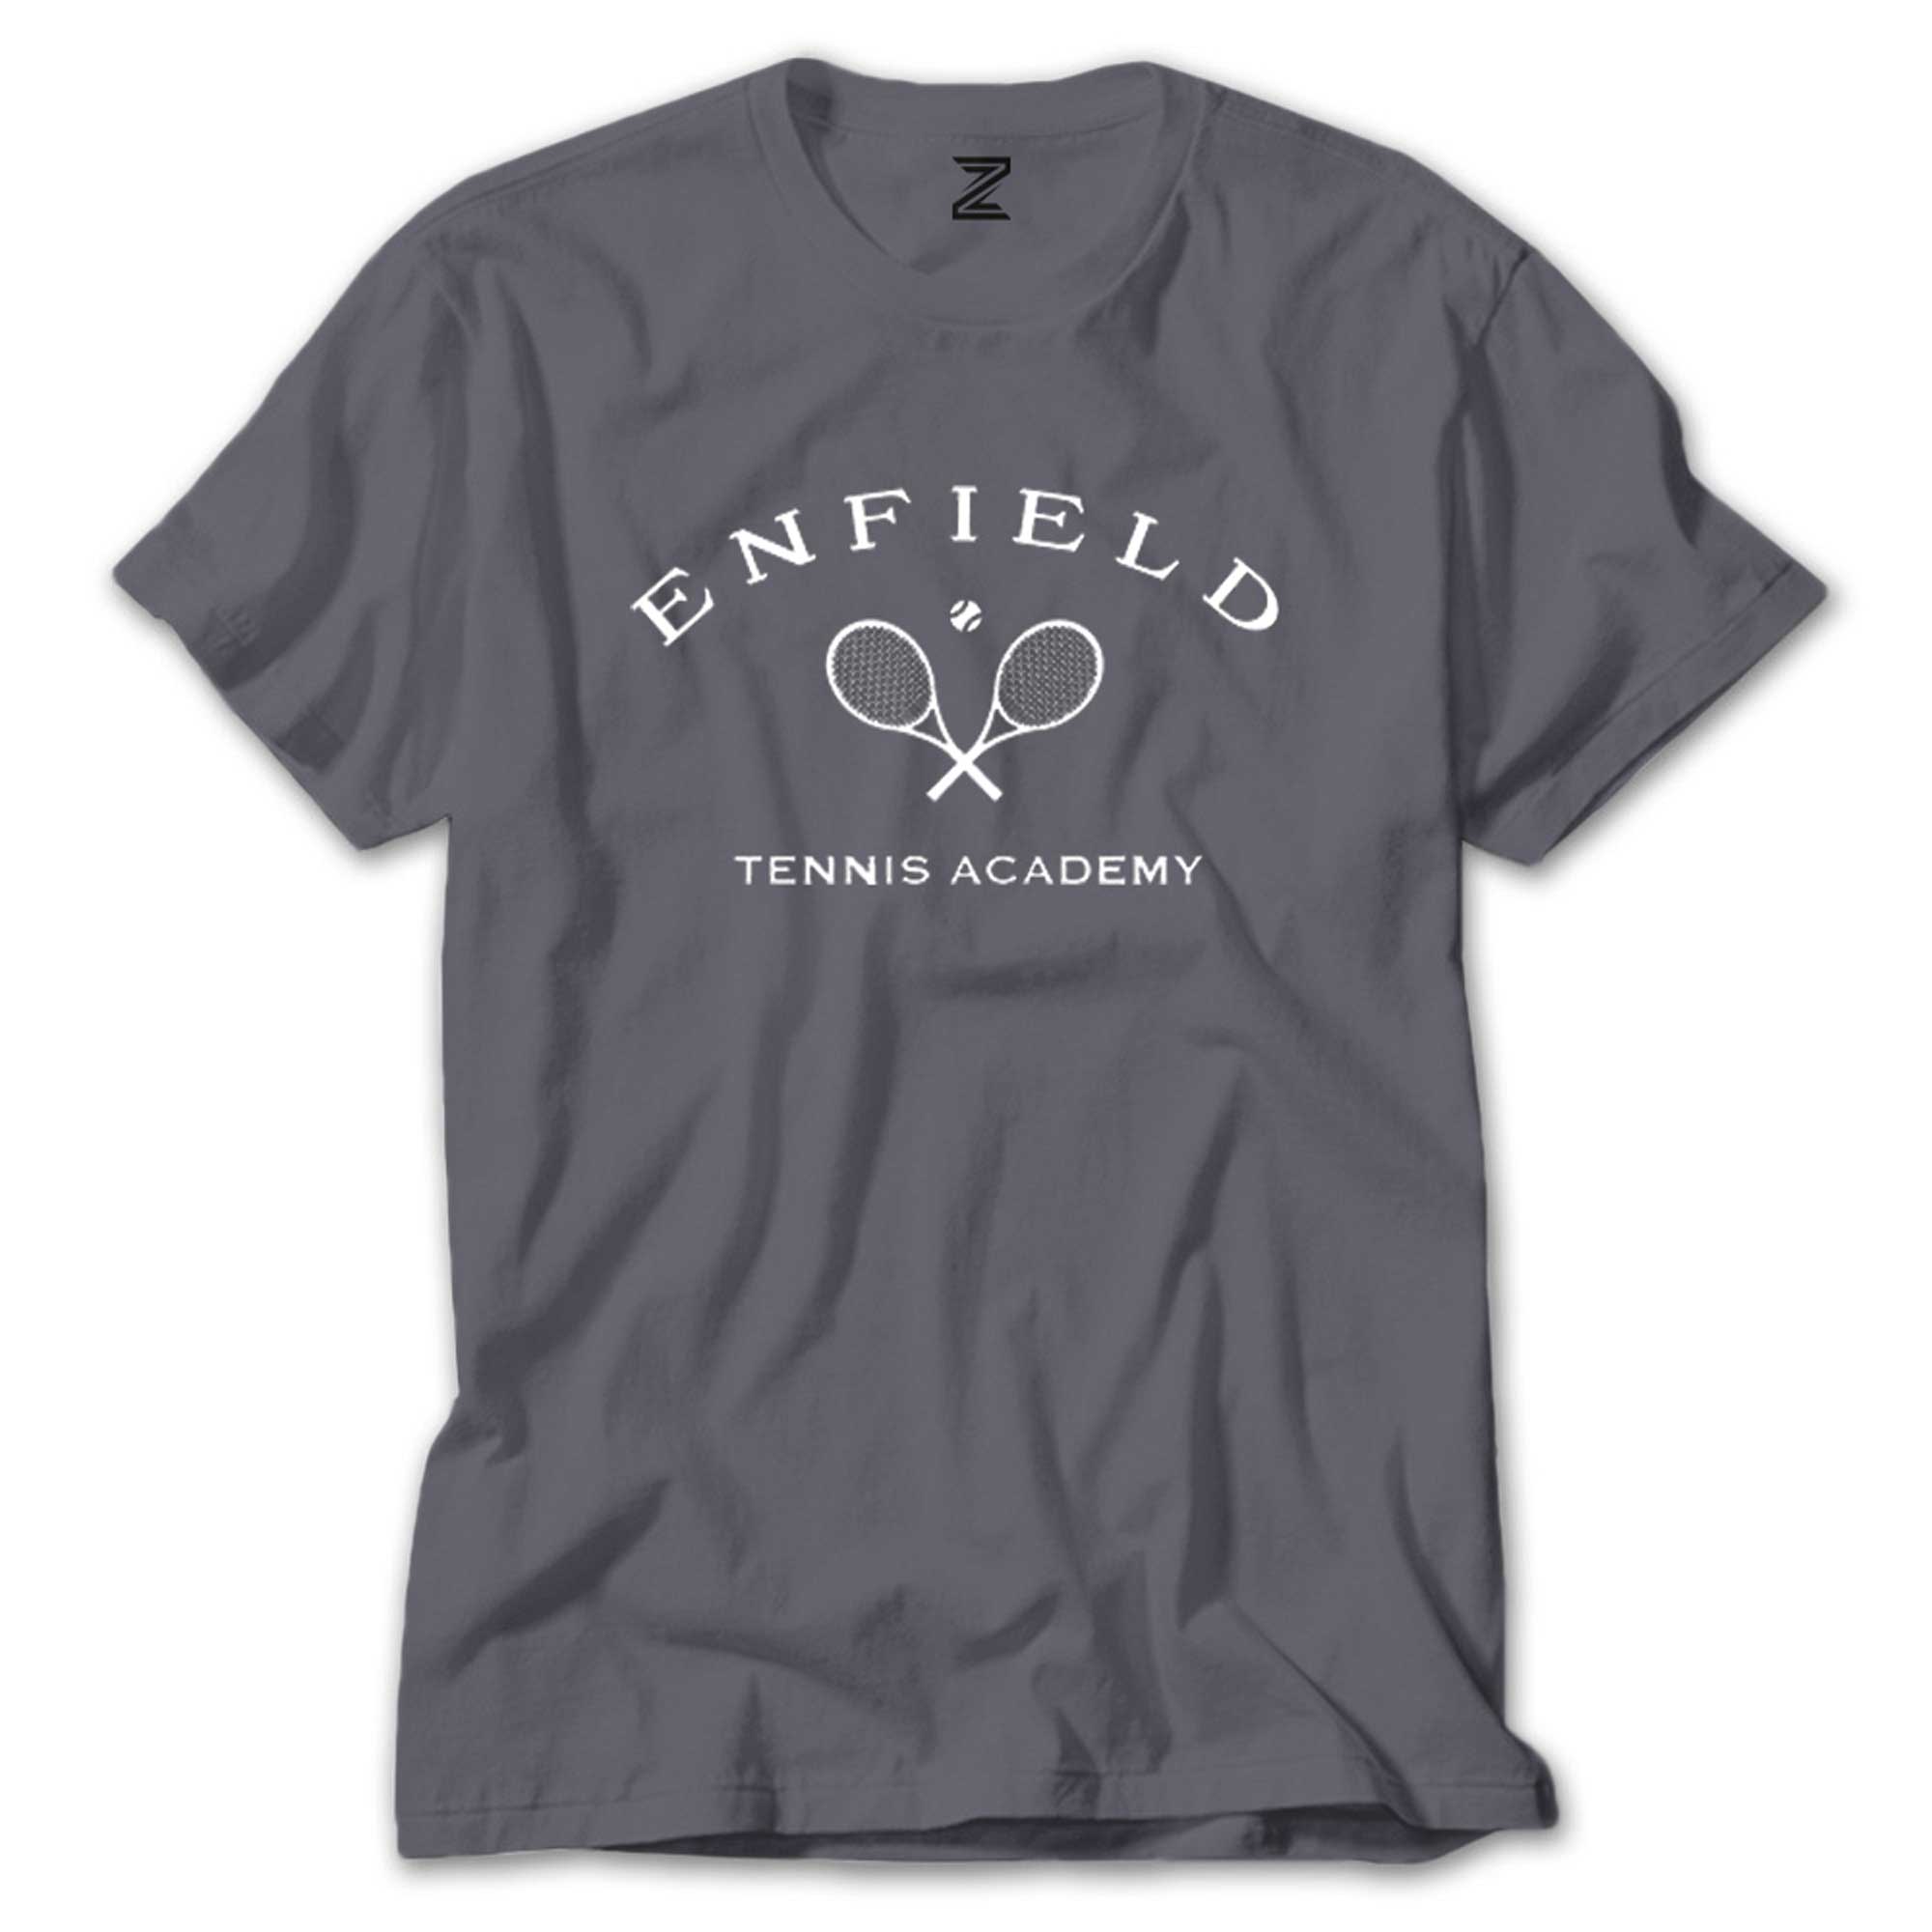 Tennis Academy Enfield Renkli Tişört